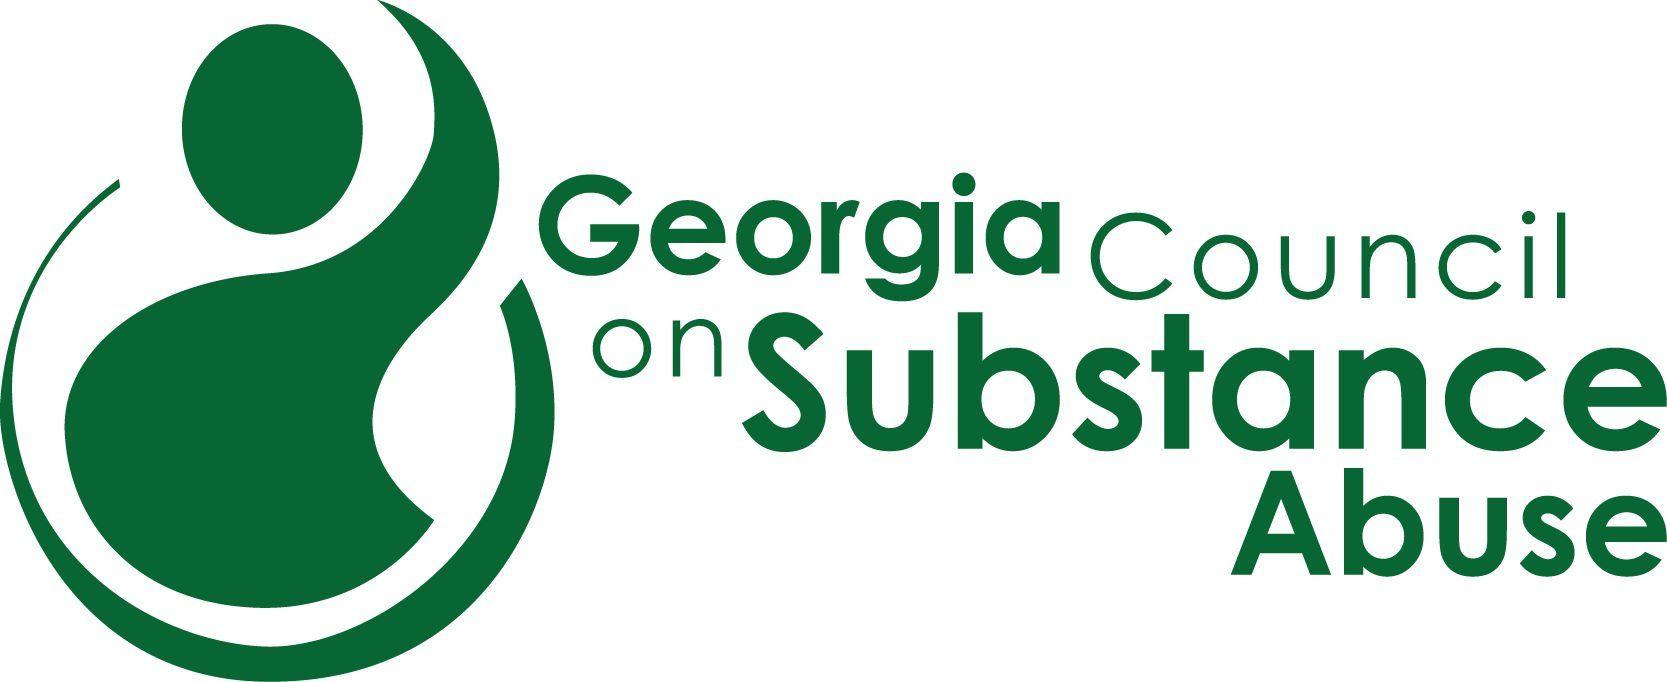 Abuse Logo - Georgia Council on Substance Abuse